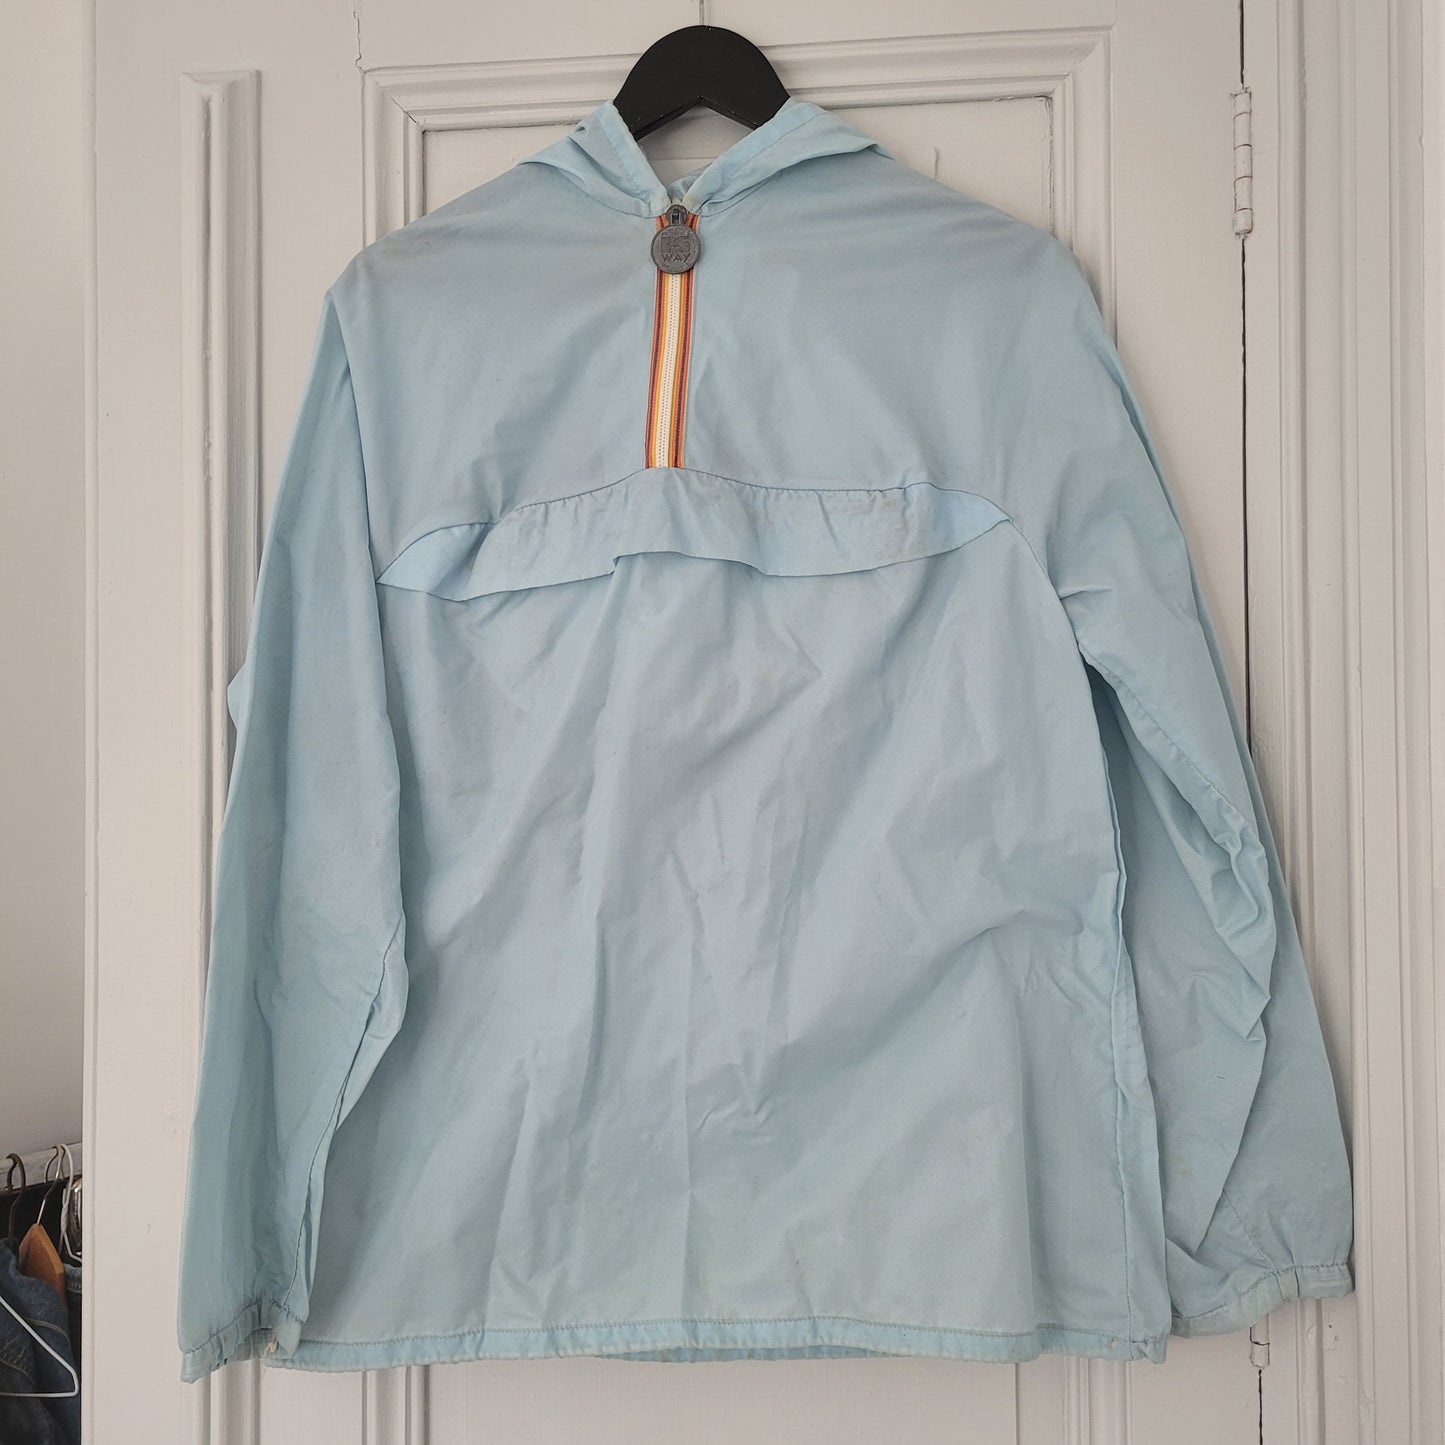 Kway wind jacket 80's / Véritable Kway années 80